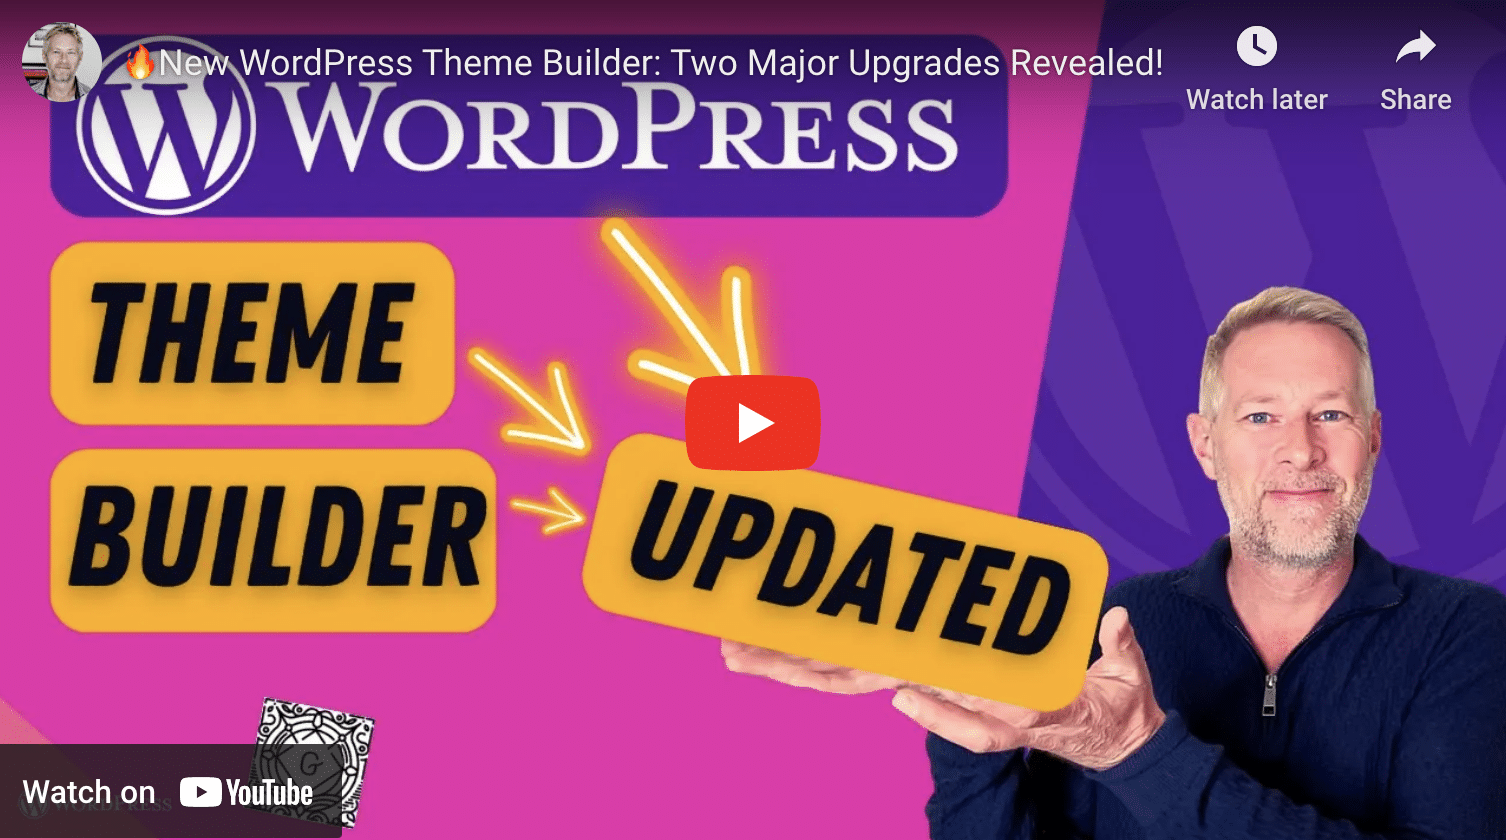 New WordPress Theme Builder: Two Major Upgrades Revealed!